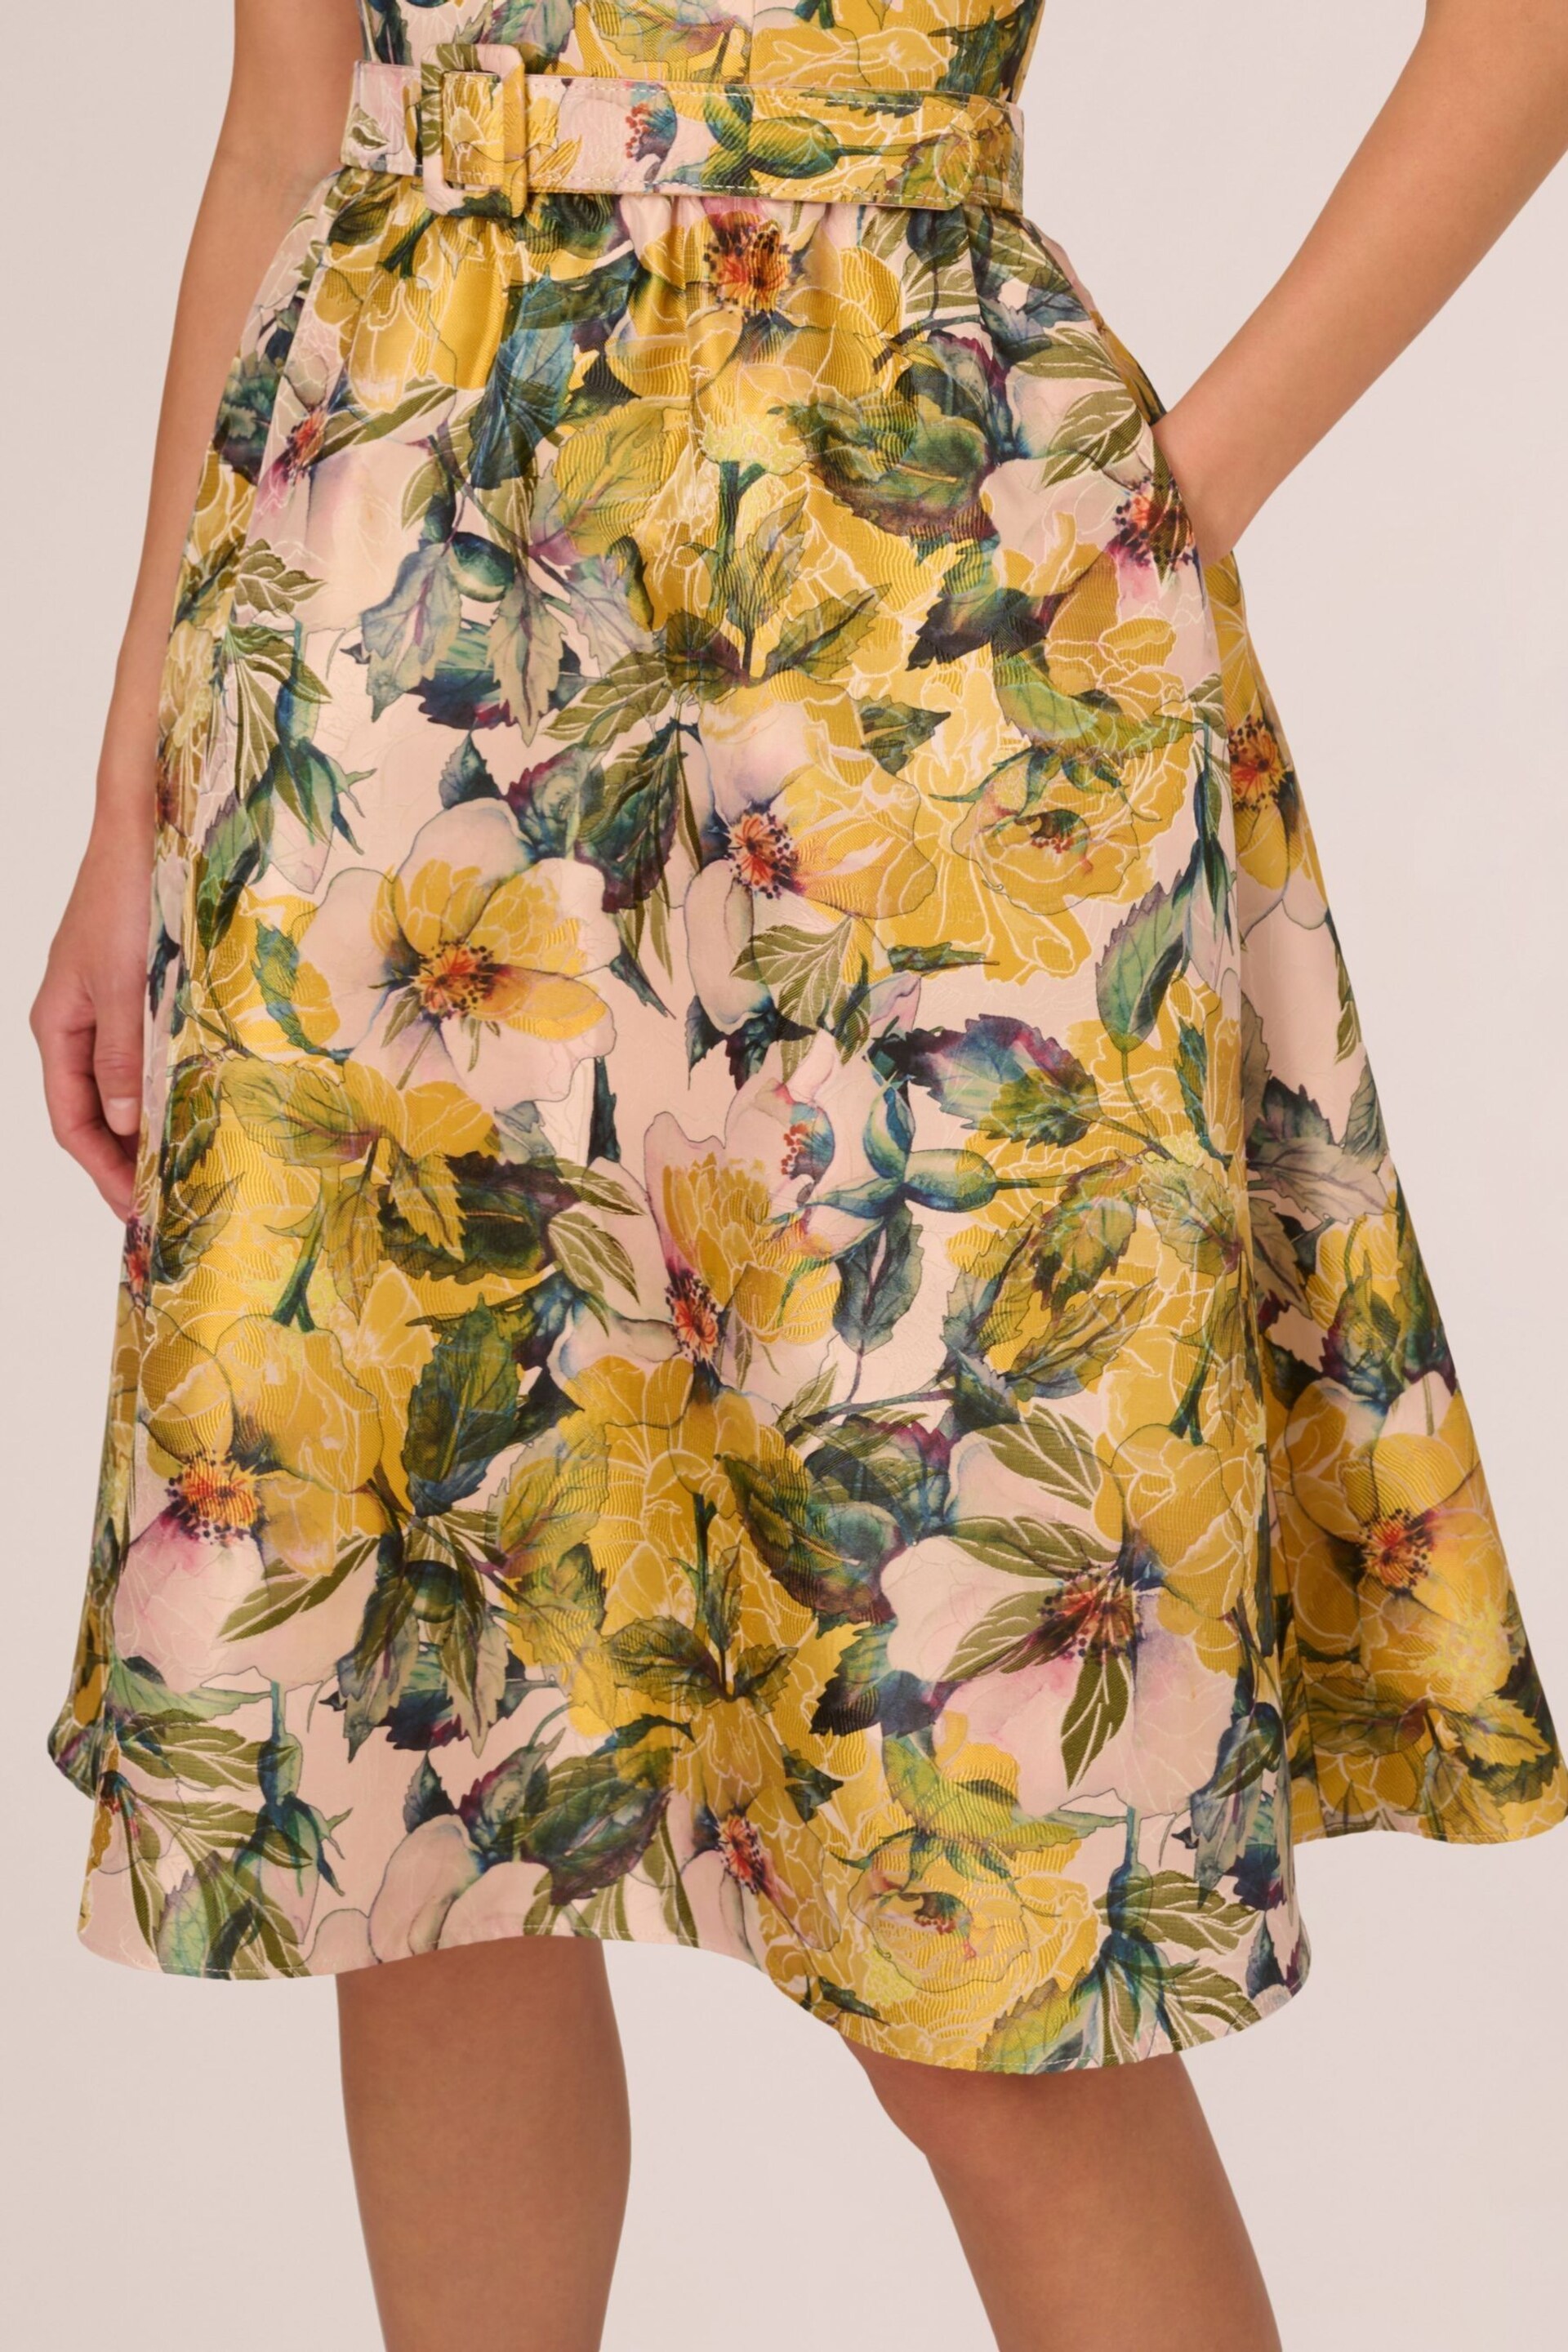 Adrianna Papell Yellow Jacquard Midi Dress - Image 4 of 5